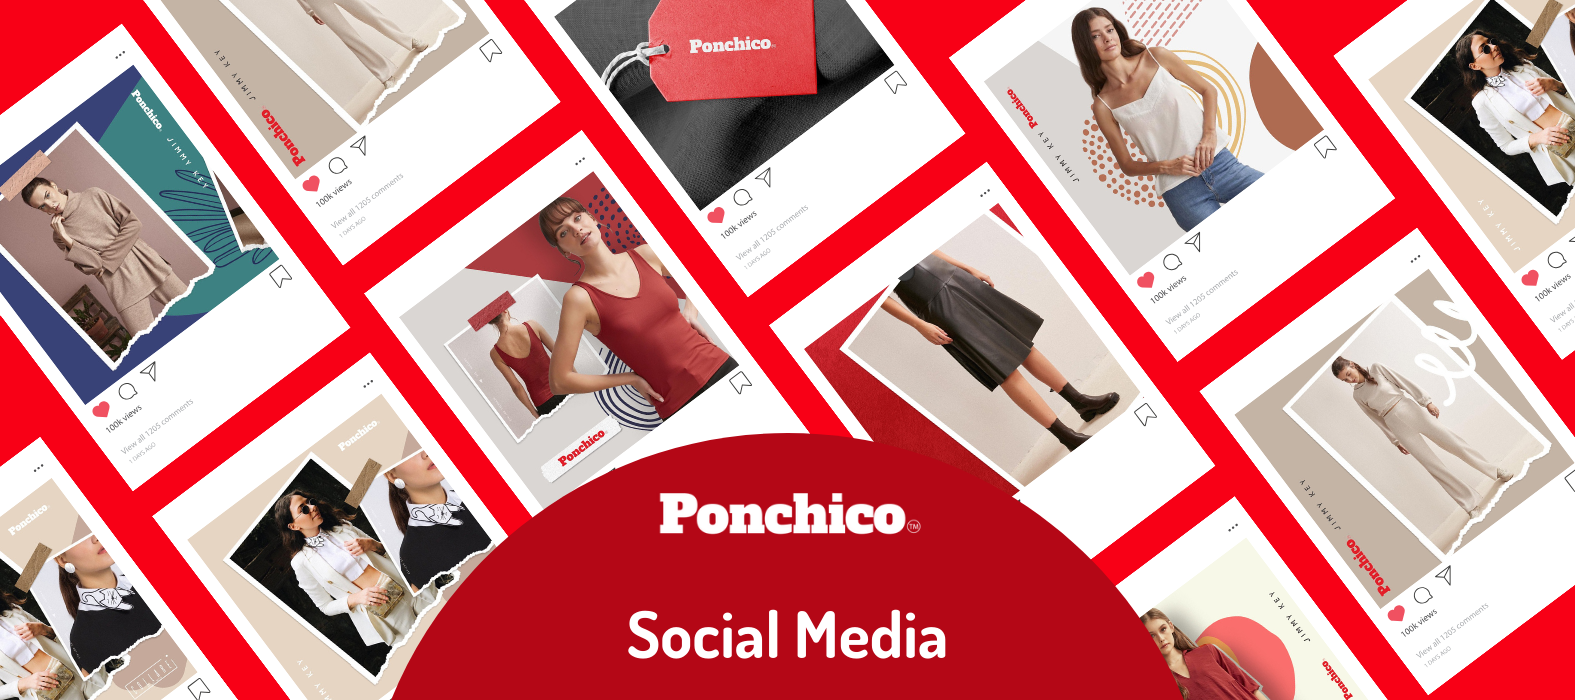 ponchico social media images